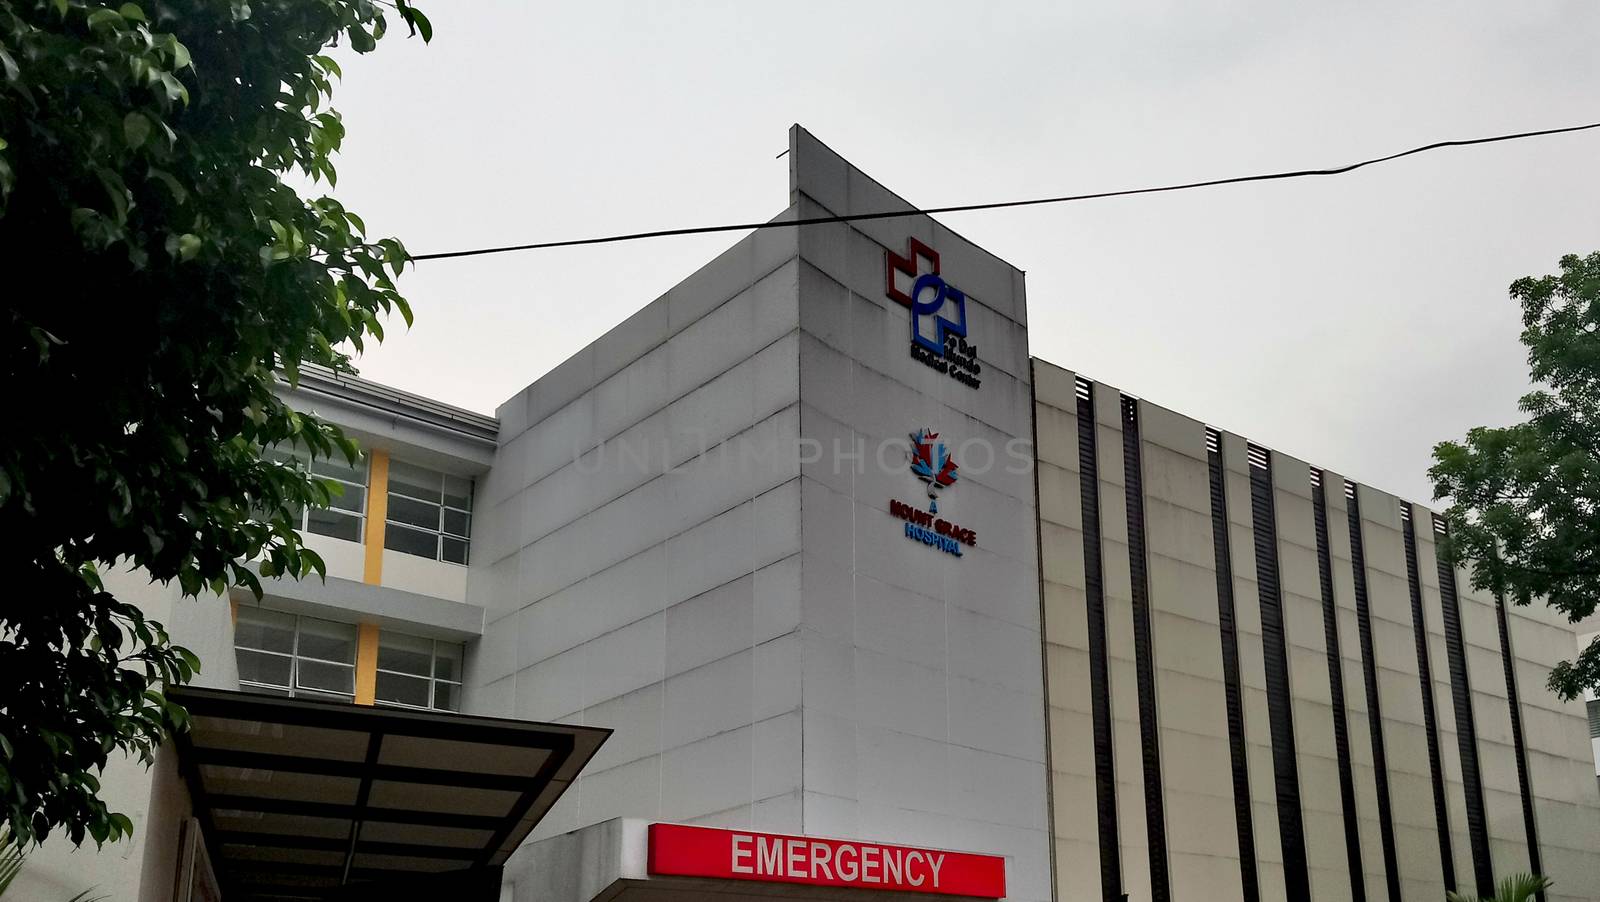 QUEZON CITY, PH - JUNE 2 - Fe Del Mundo Medical Center hospital facade on June 2, 2018 in Quezon City, Philippines.